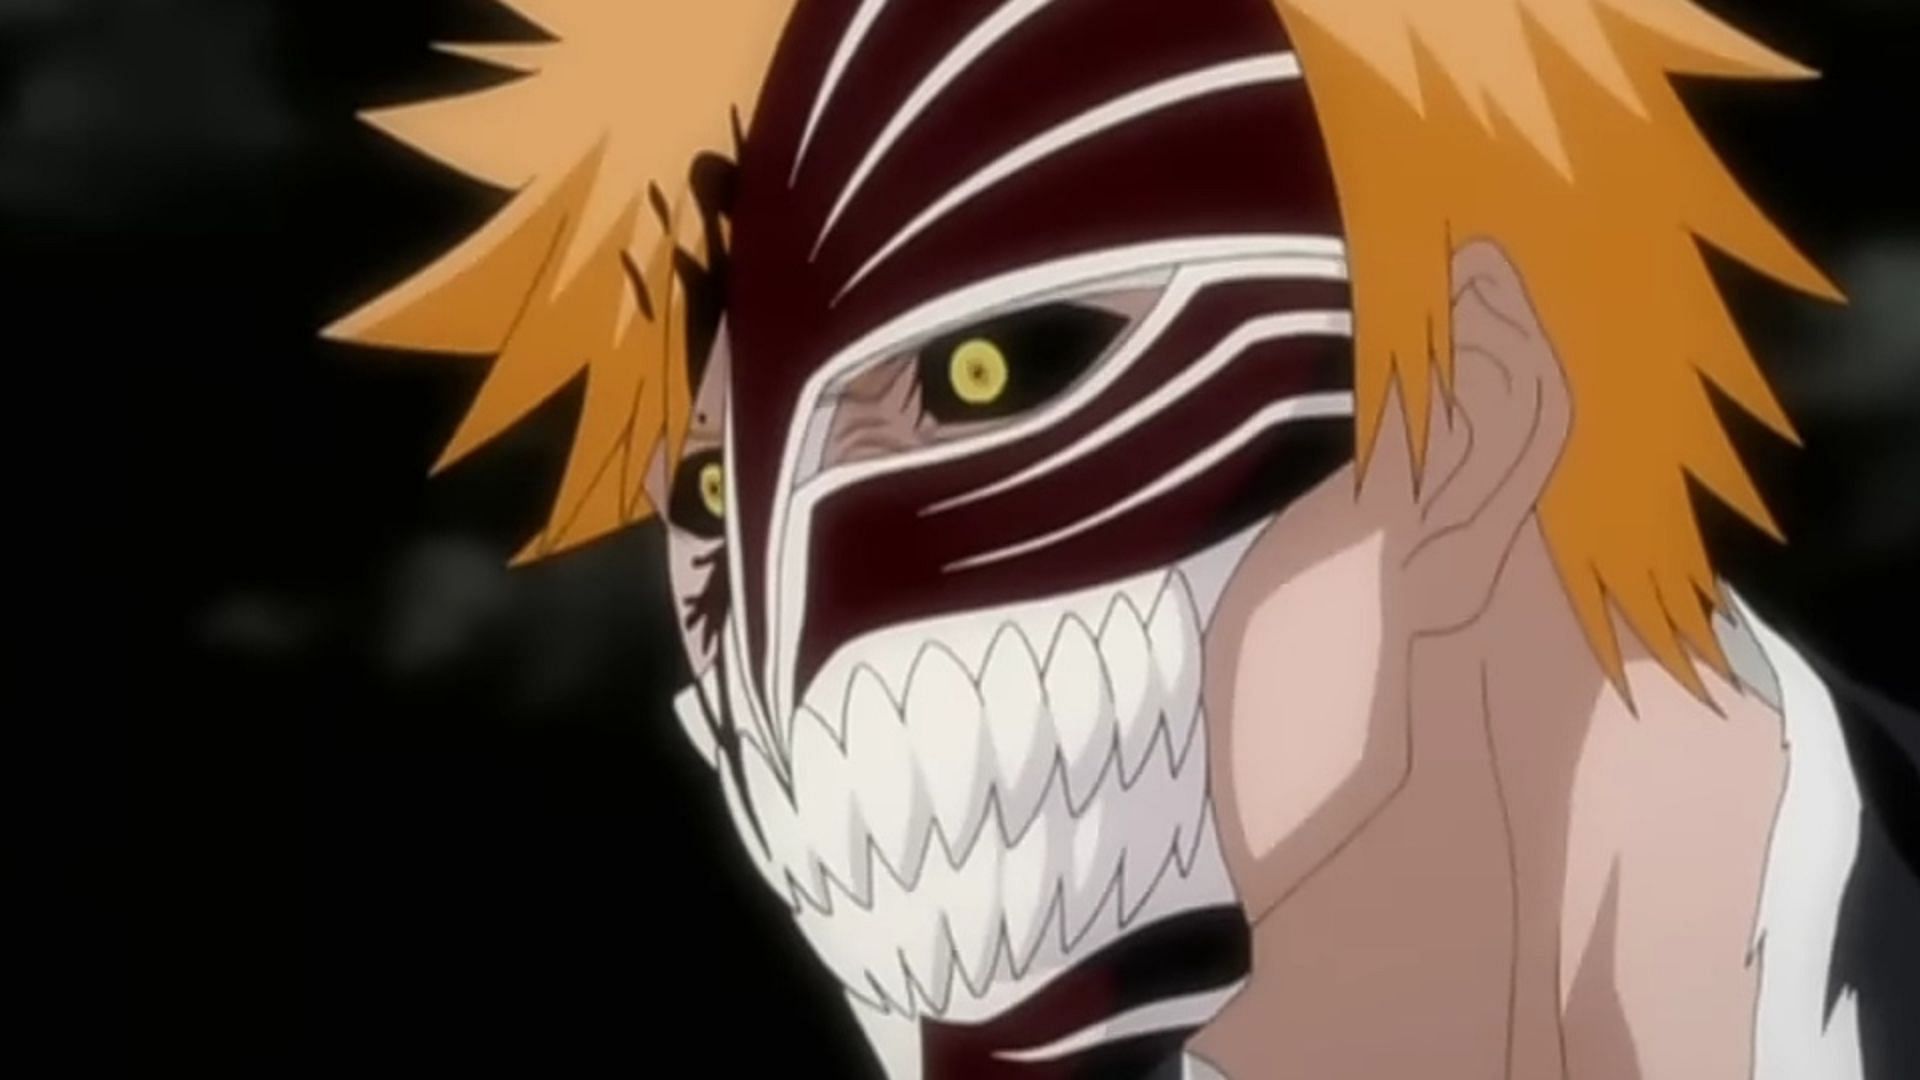 Hollow Mask Ichigo as seen in Bleach anime (Image via Studio Pierrot)